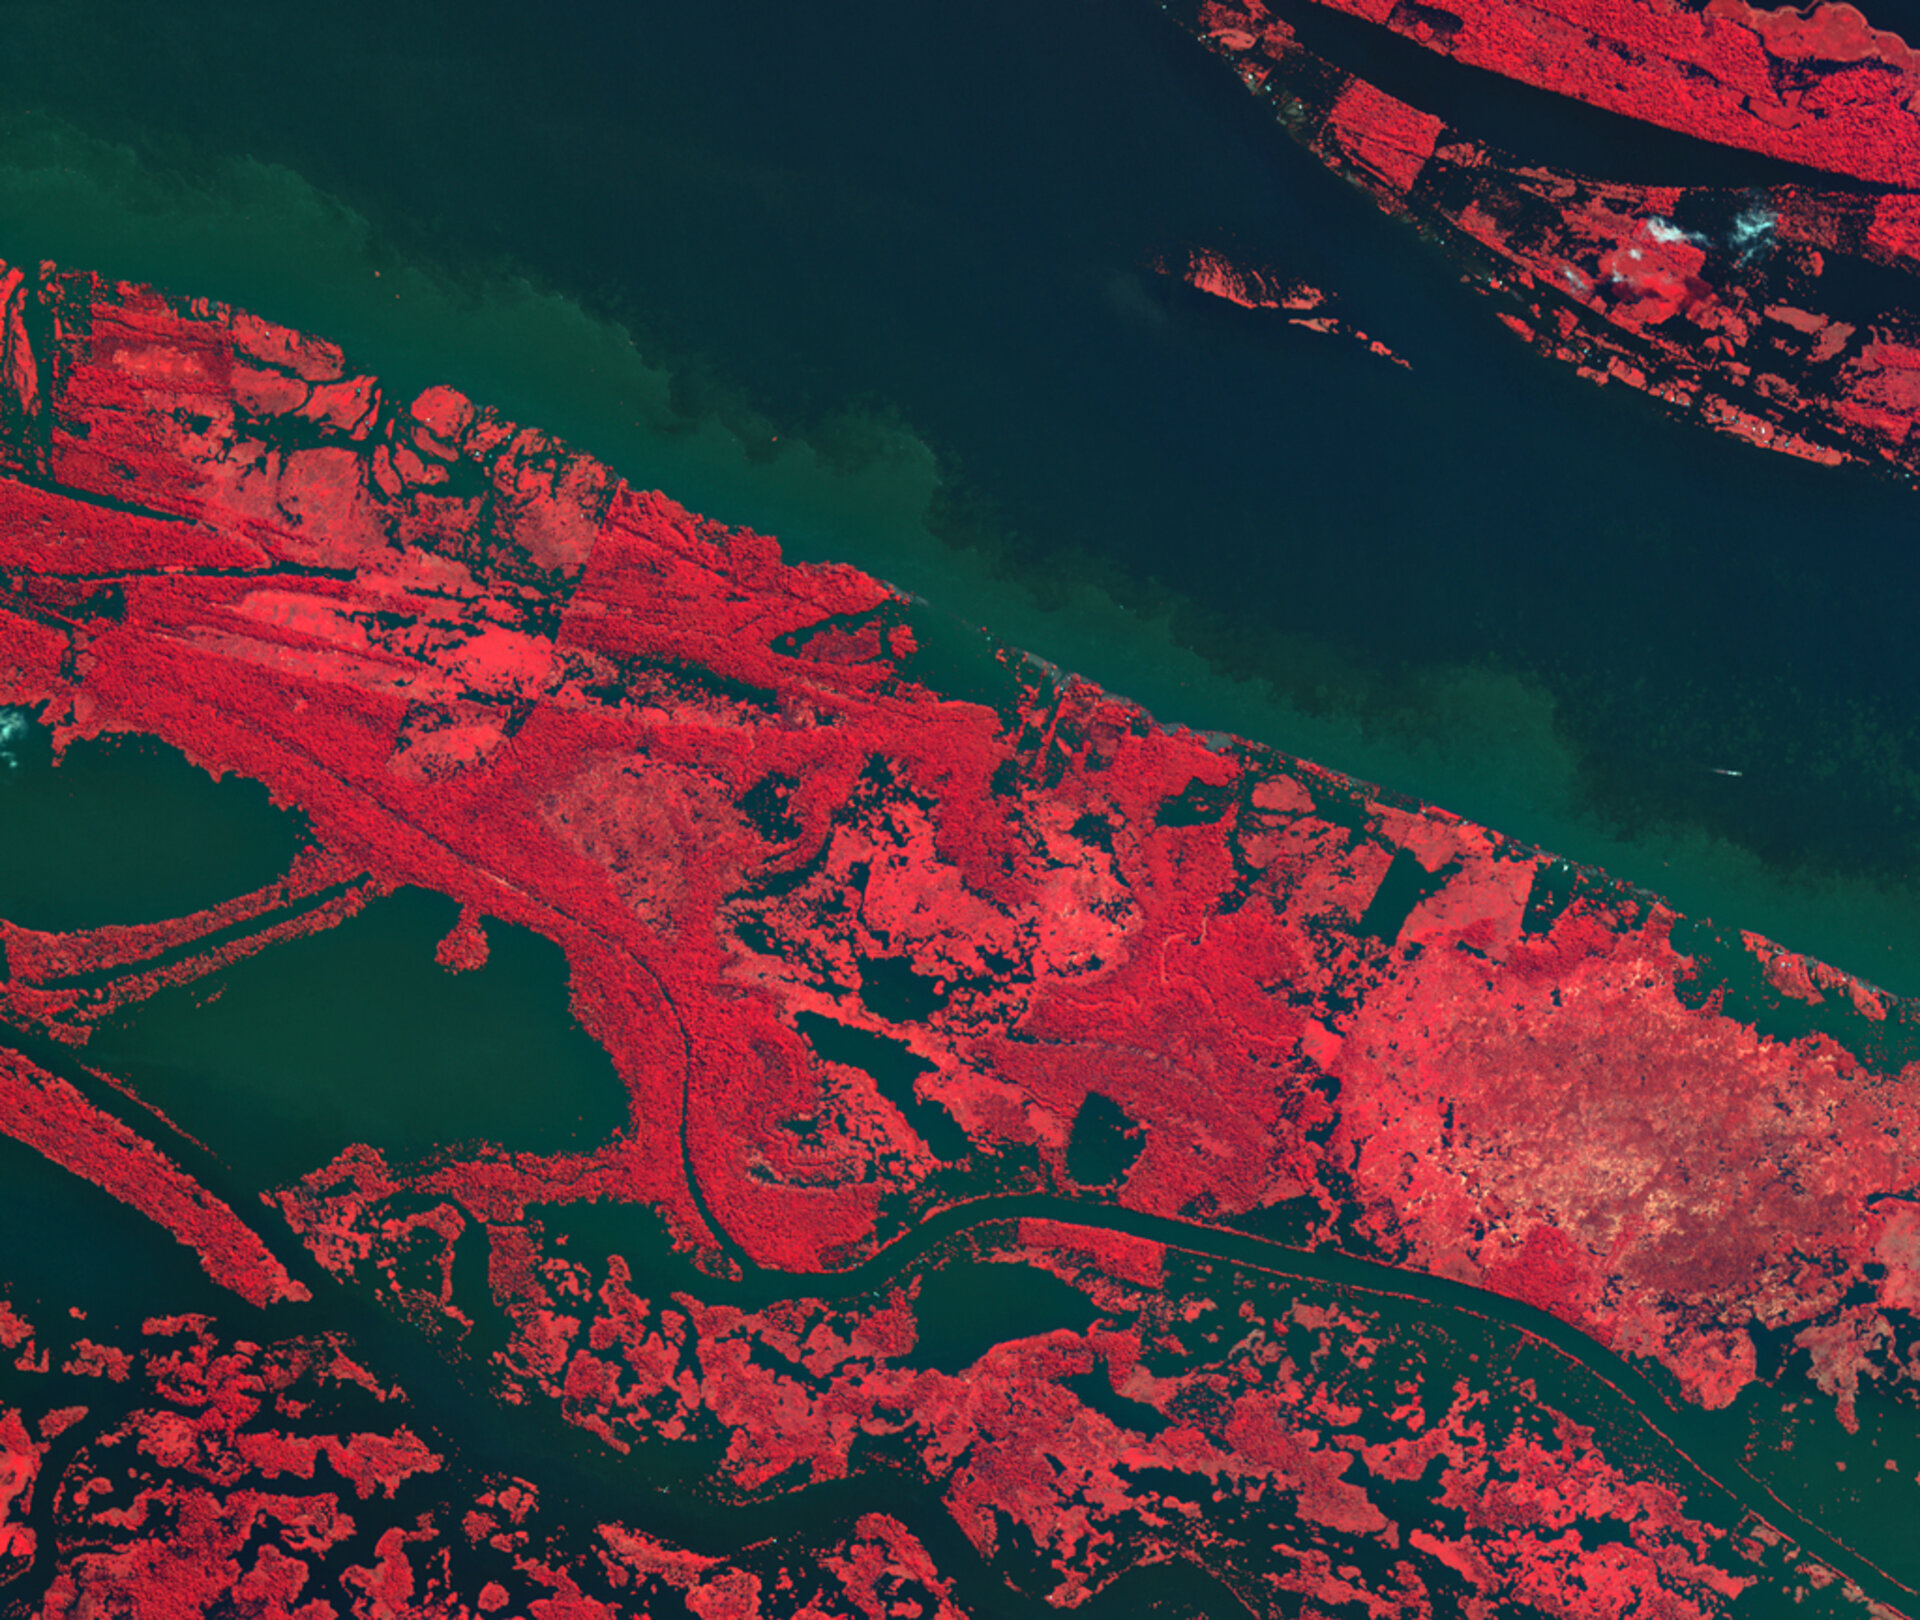 Il Rio delle Amazzoni visto dal satellite Kompsat-2